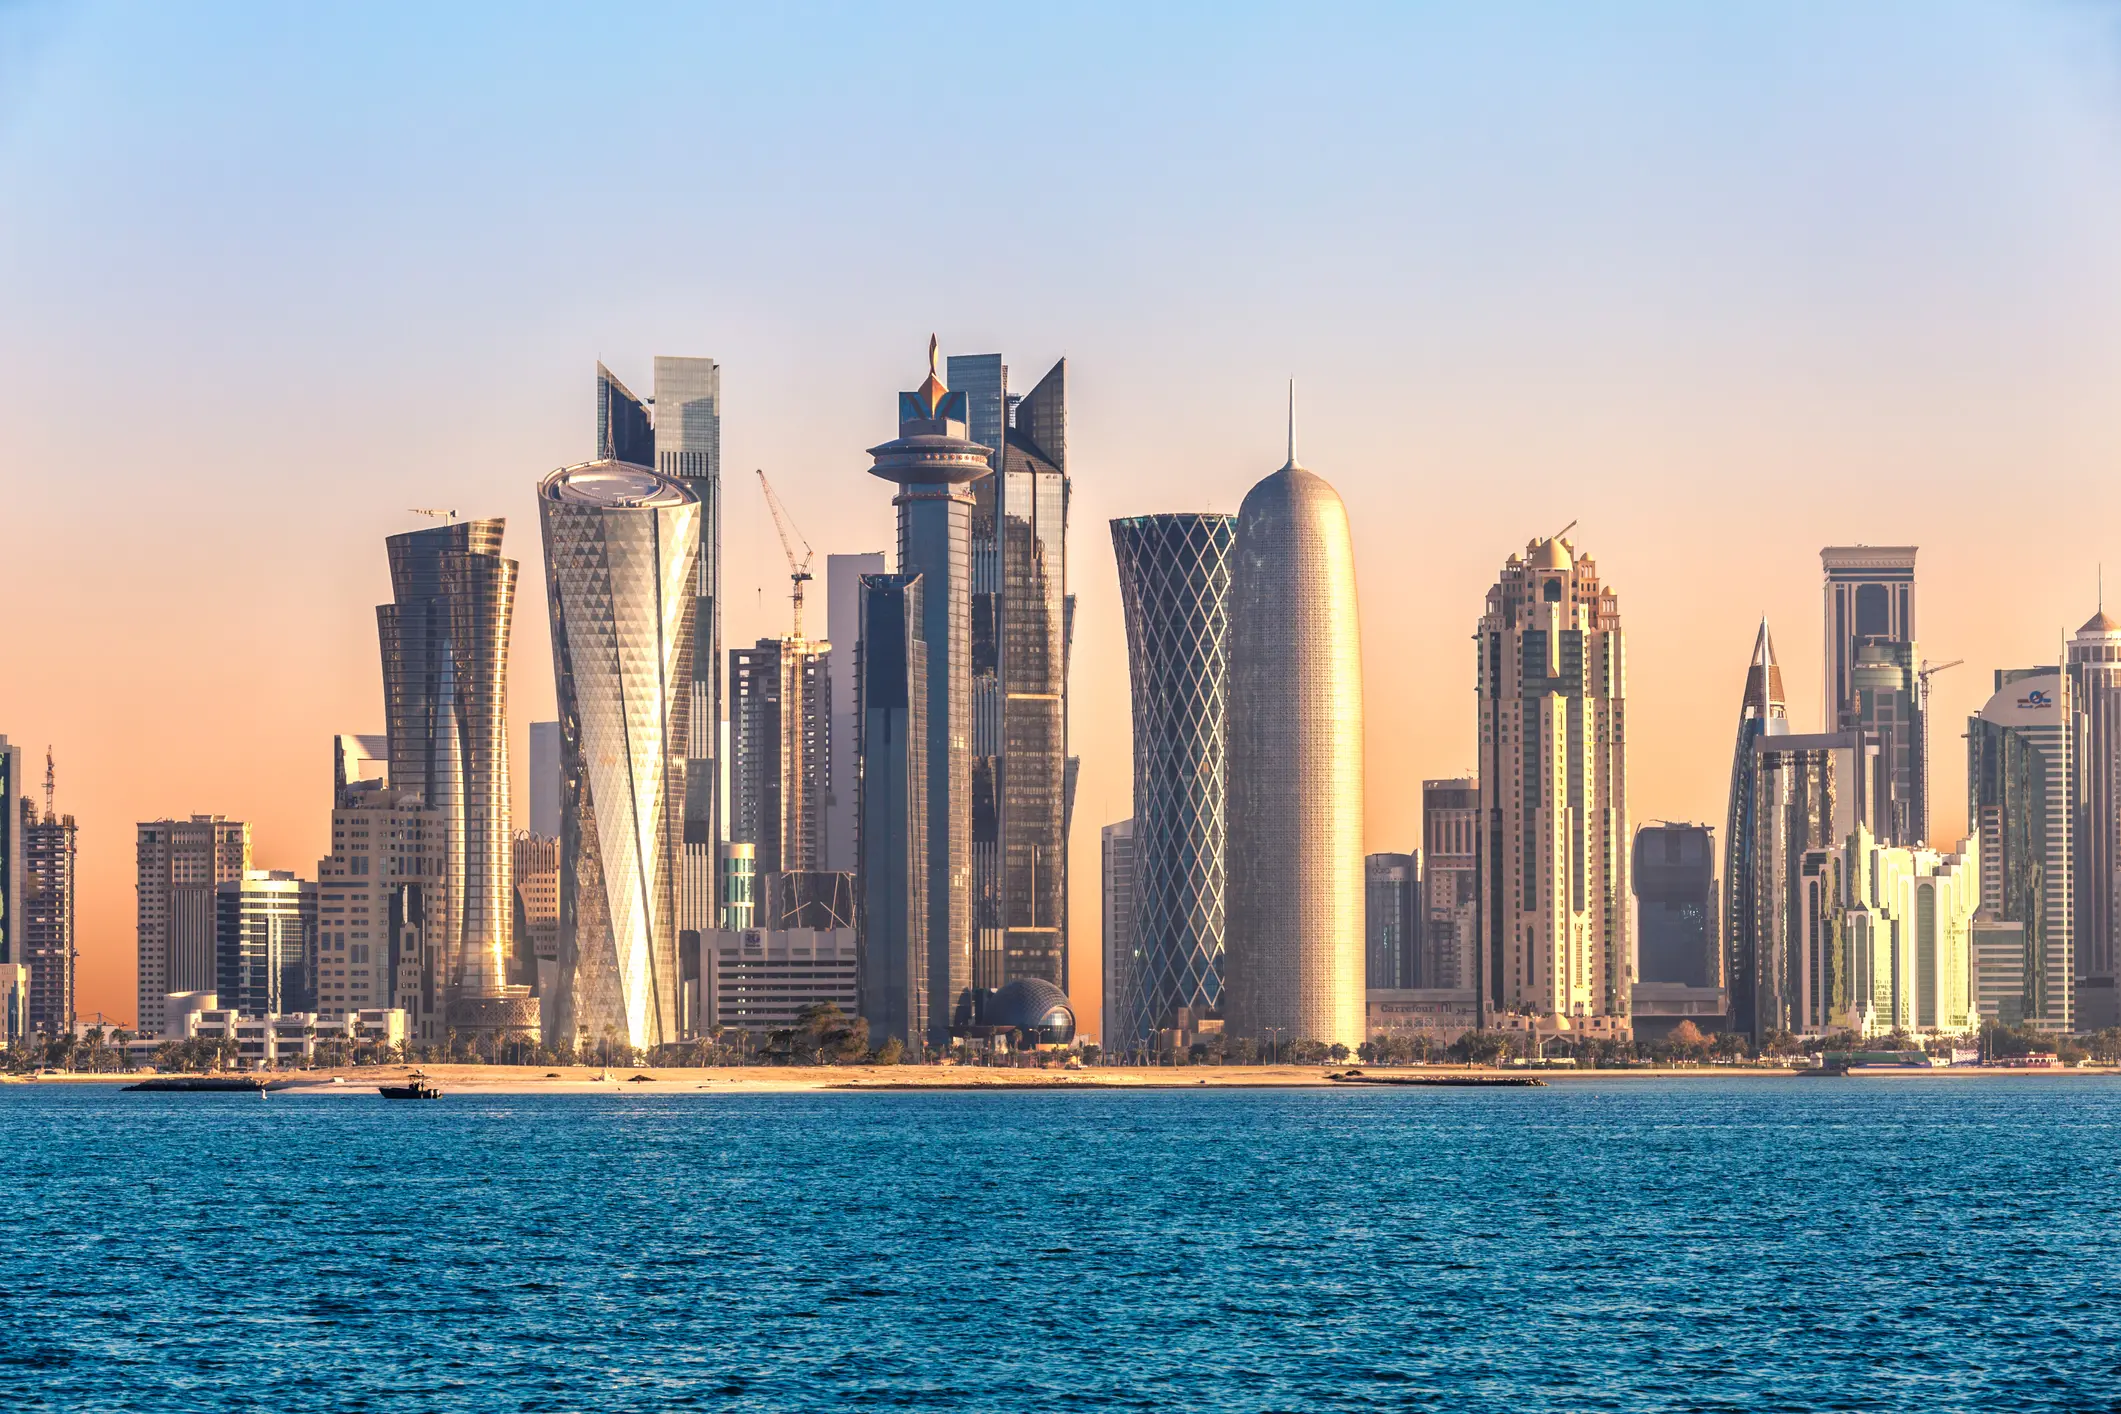 Top headlines from Qatar Economic Forum